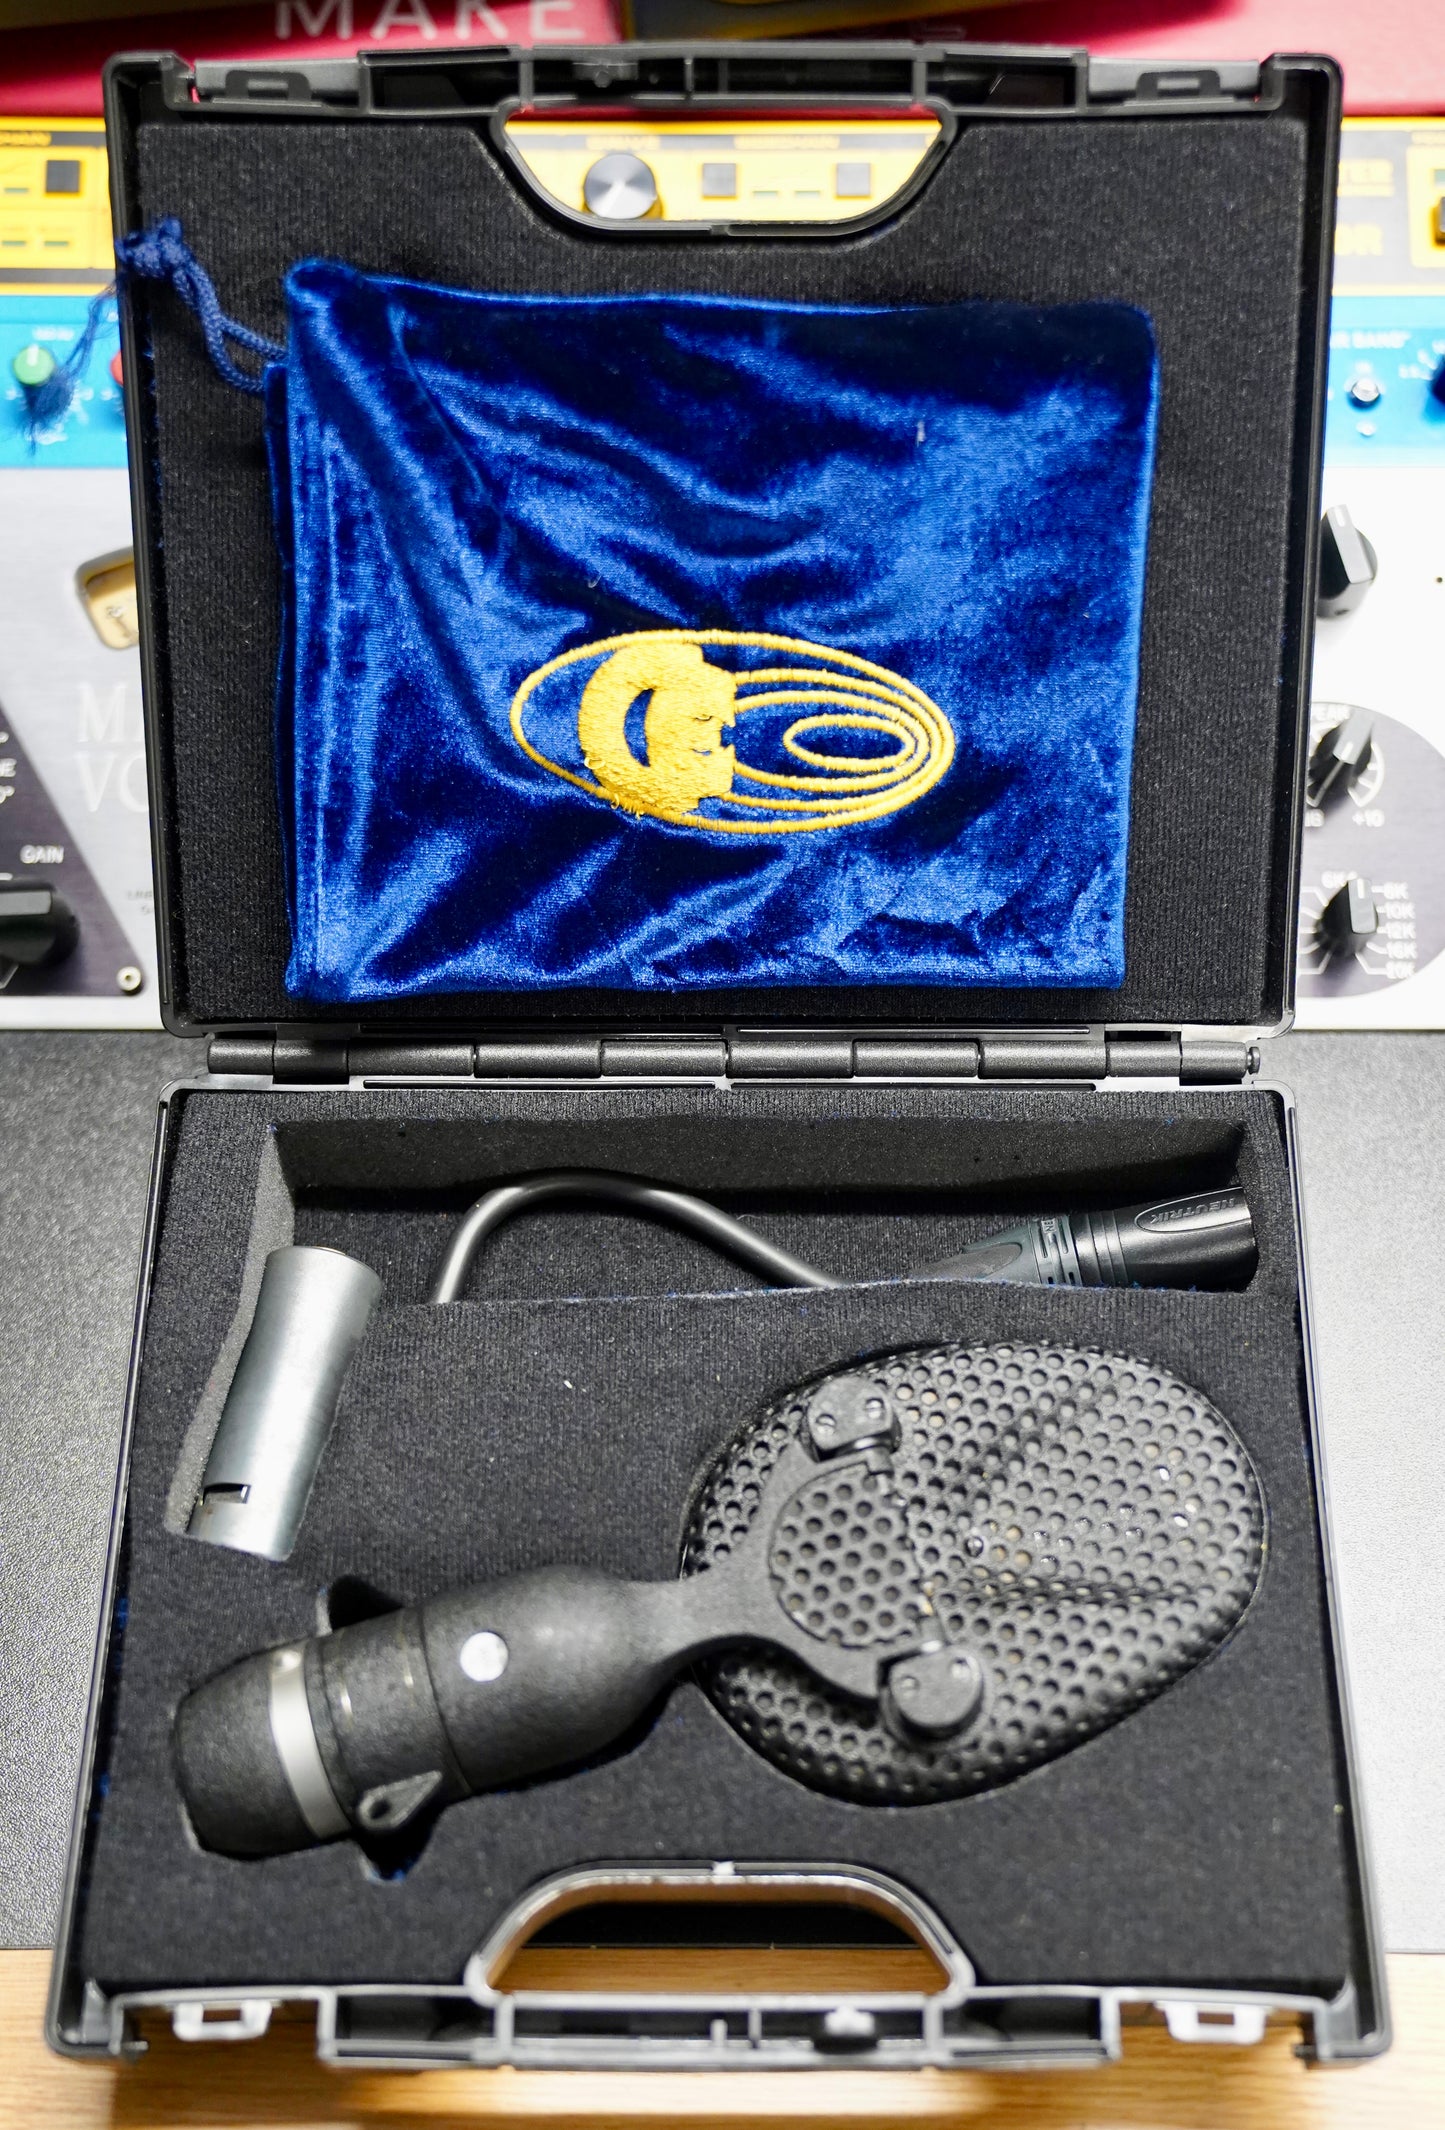 Coles 4038 Ribbon Microphone